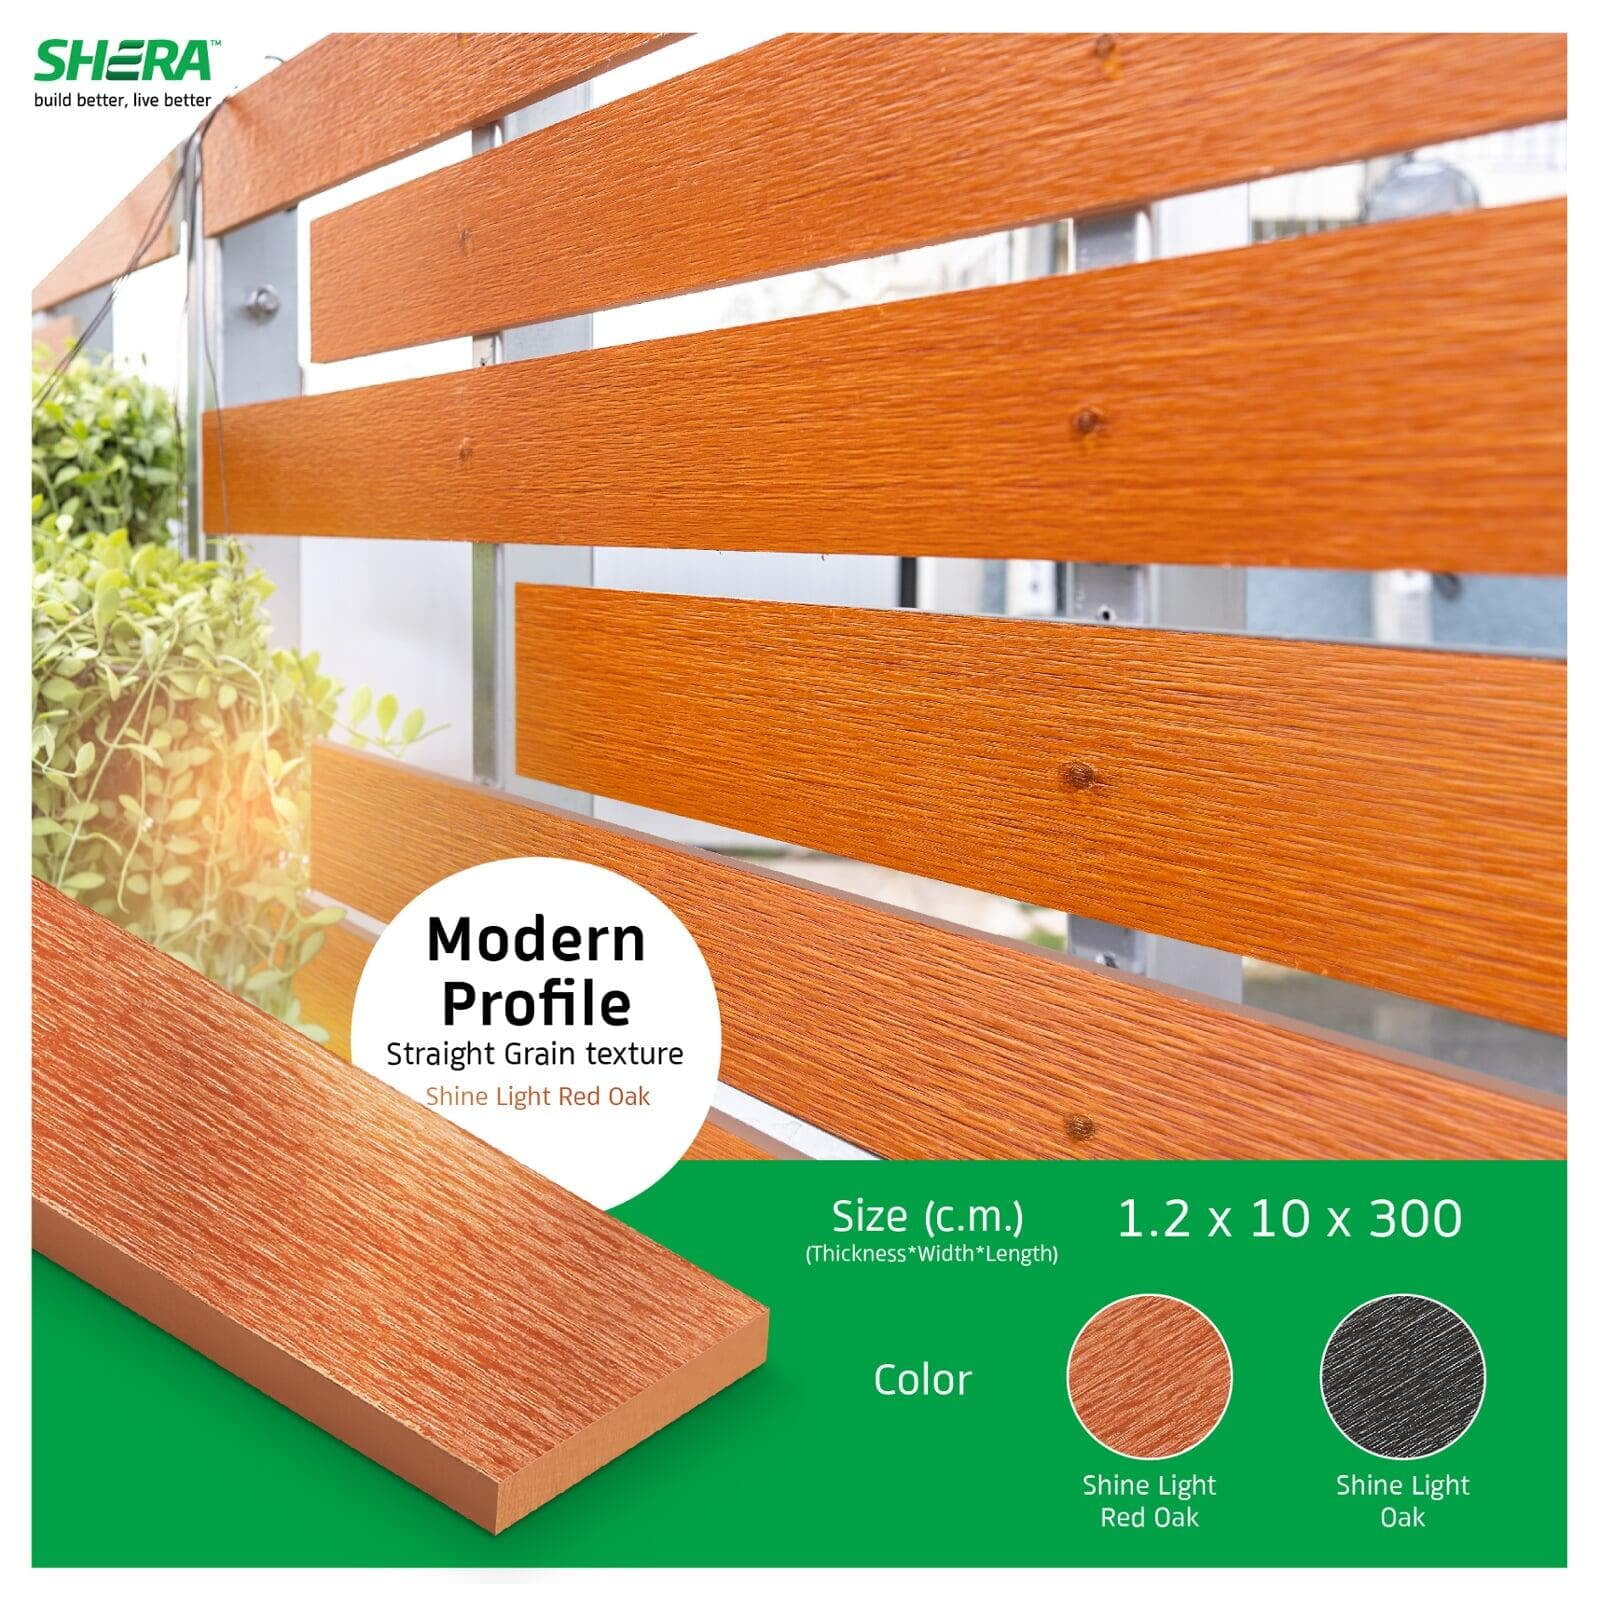 SHERA Fence fibre cement fence planks